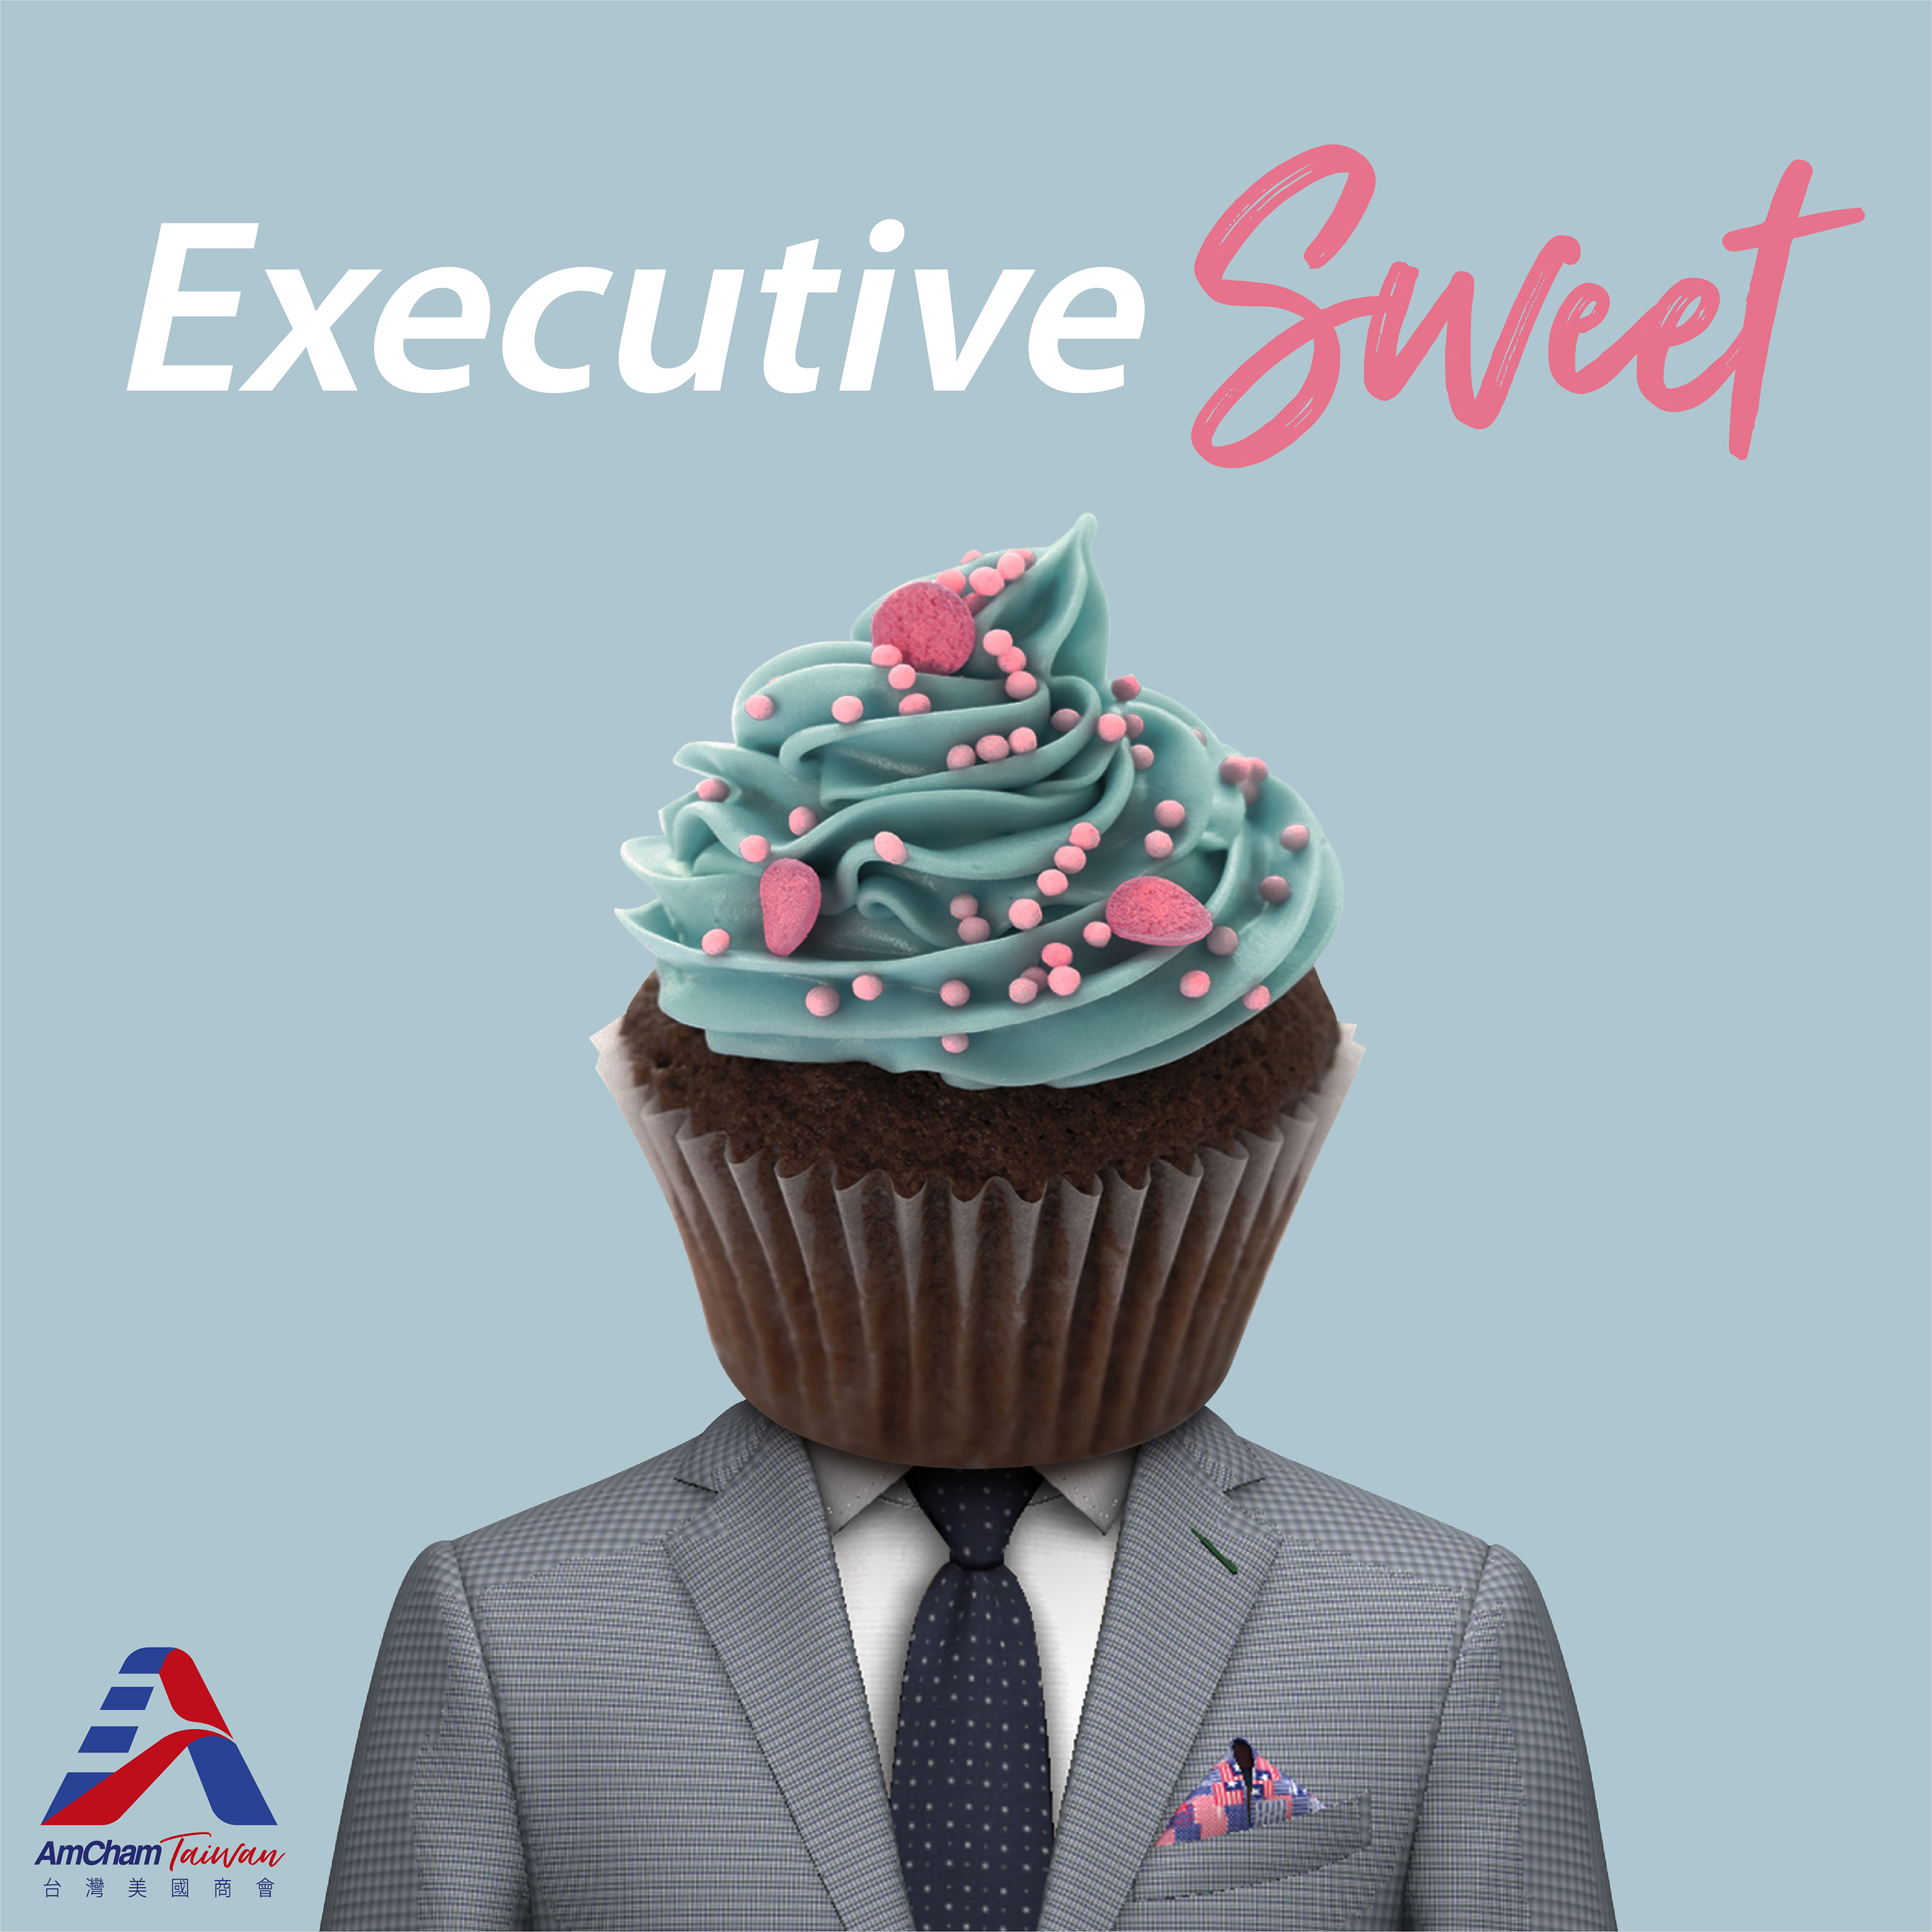 Executive Sweet by AmCham